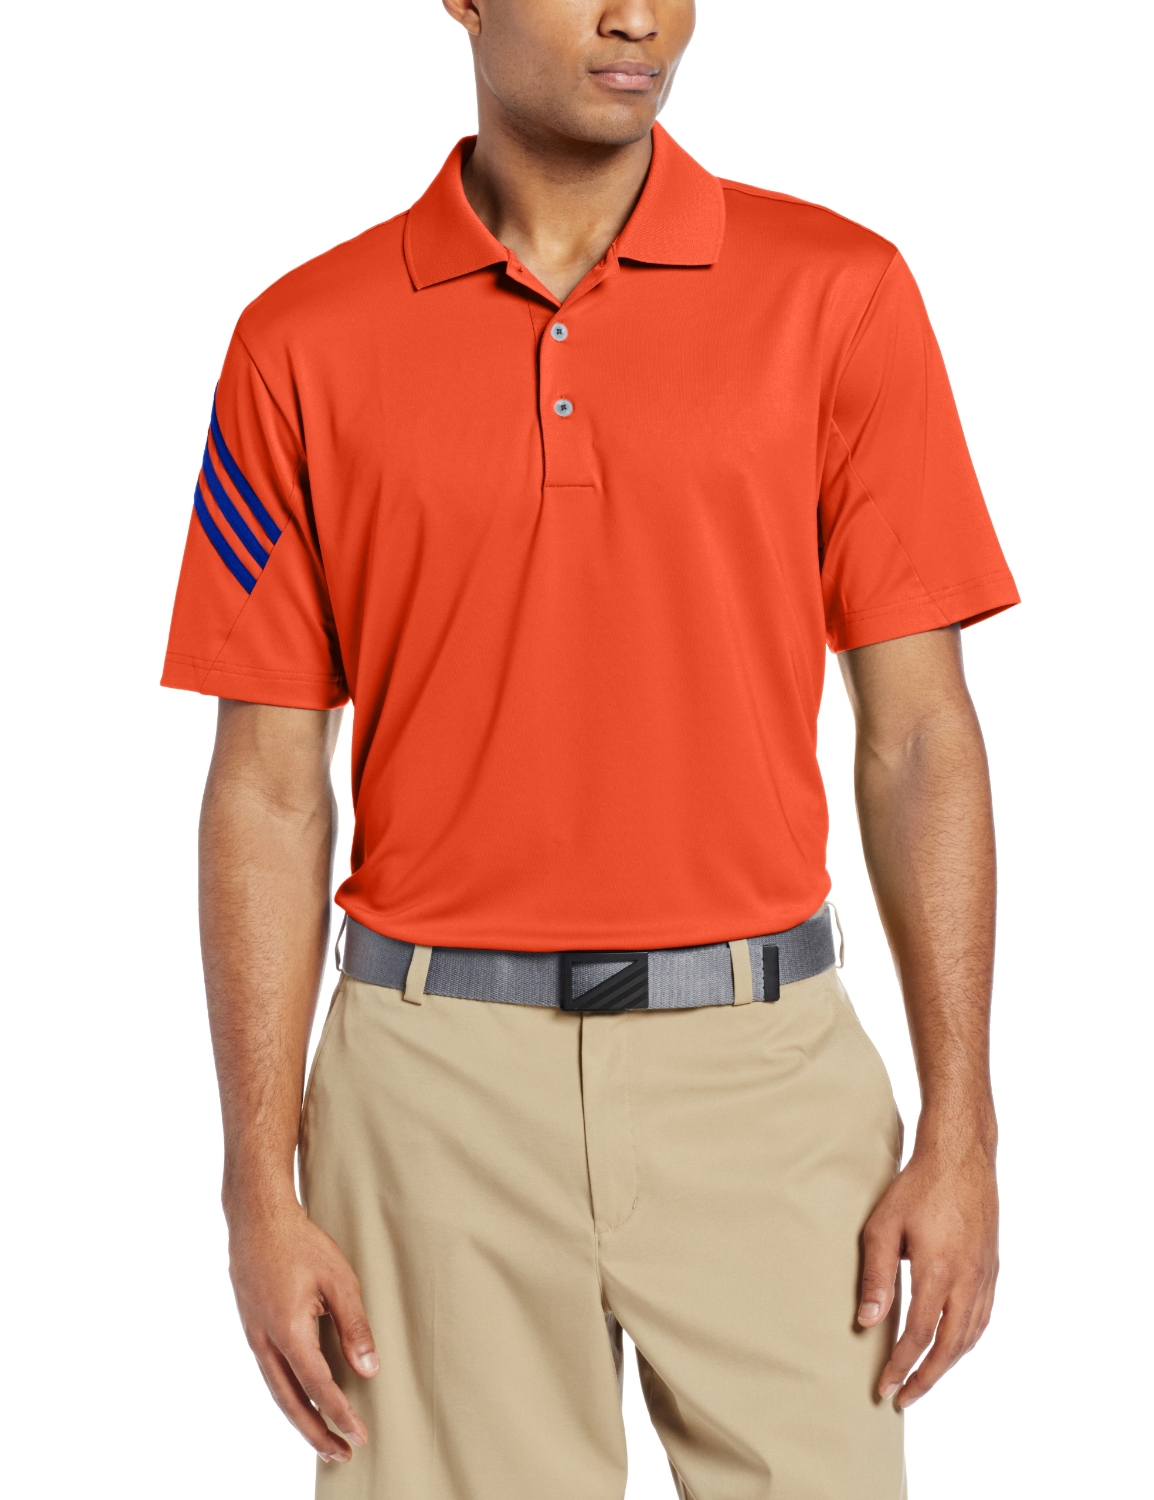 adidas puremotion golf shirt